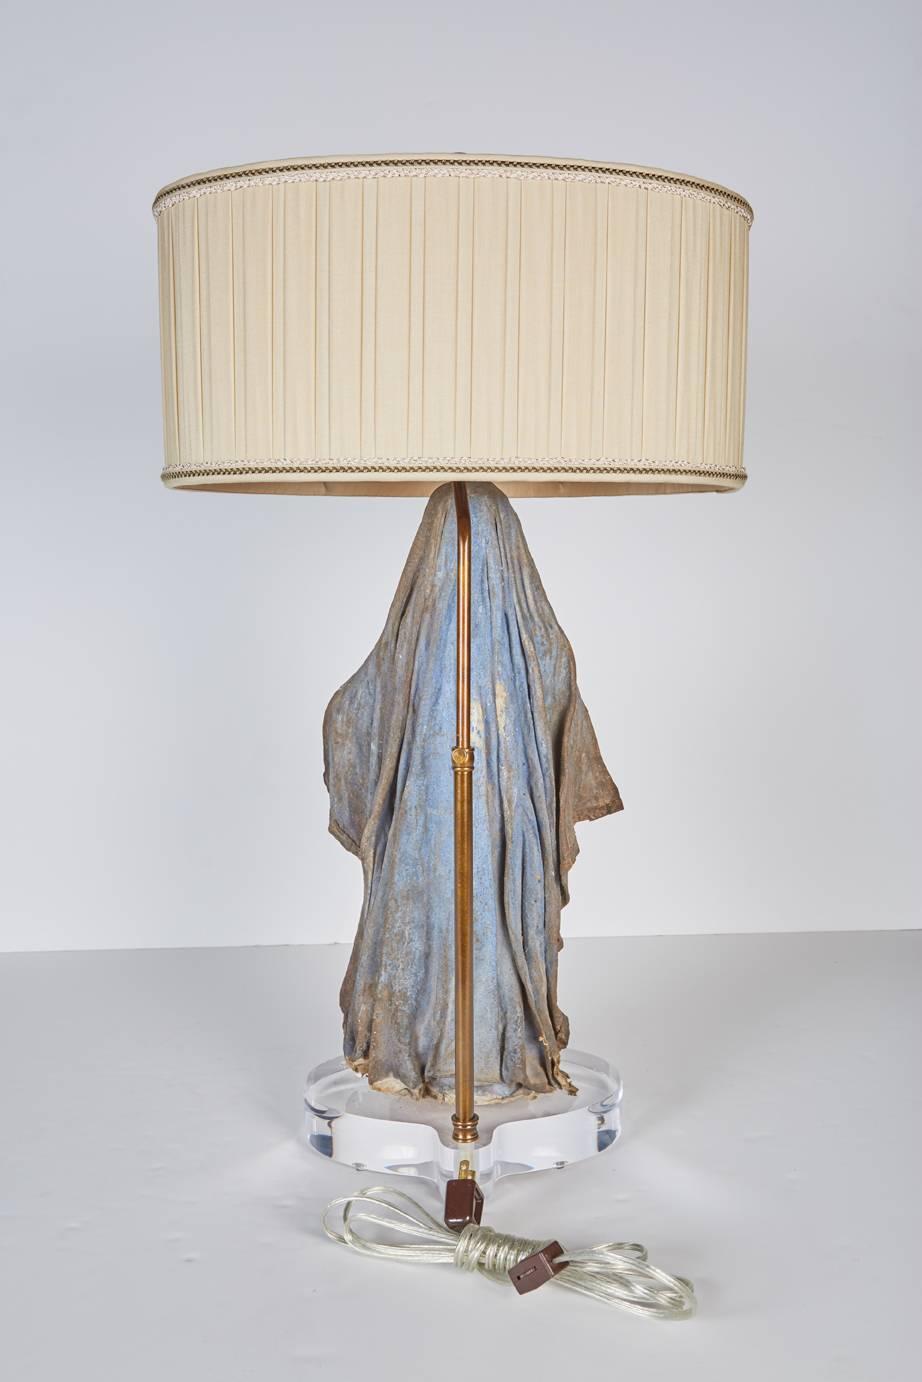 European Antique Papier Mâché Creche Figure of the Madonna Now Custom Mounted as a Lamp For Sale